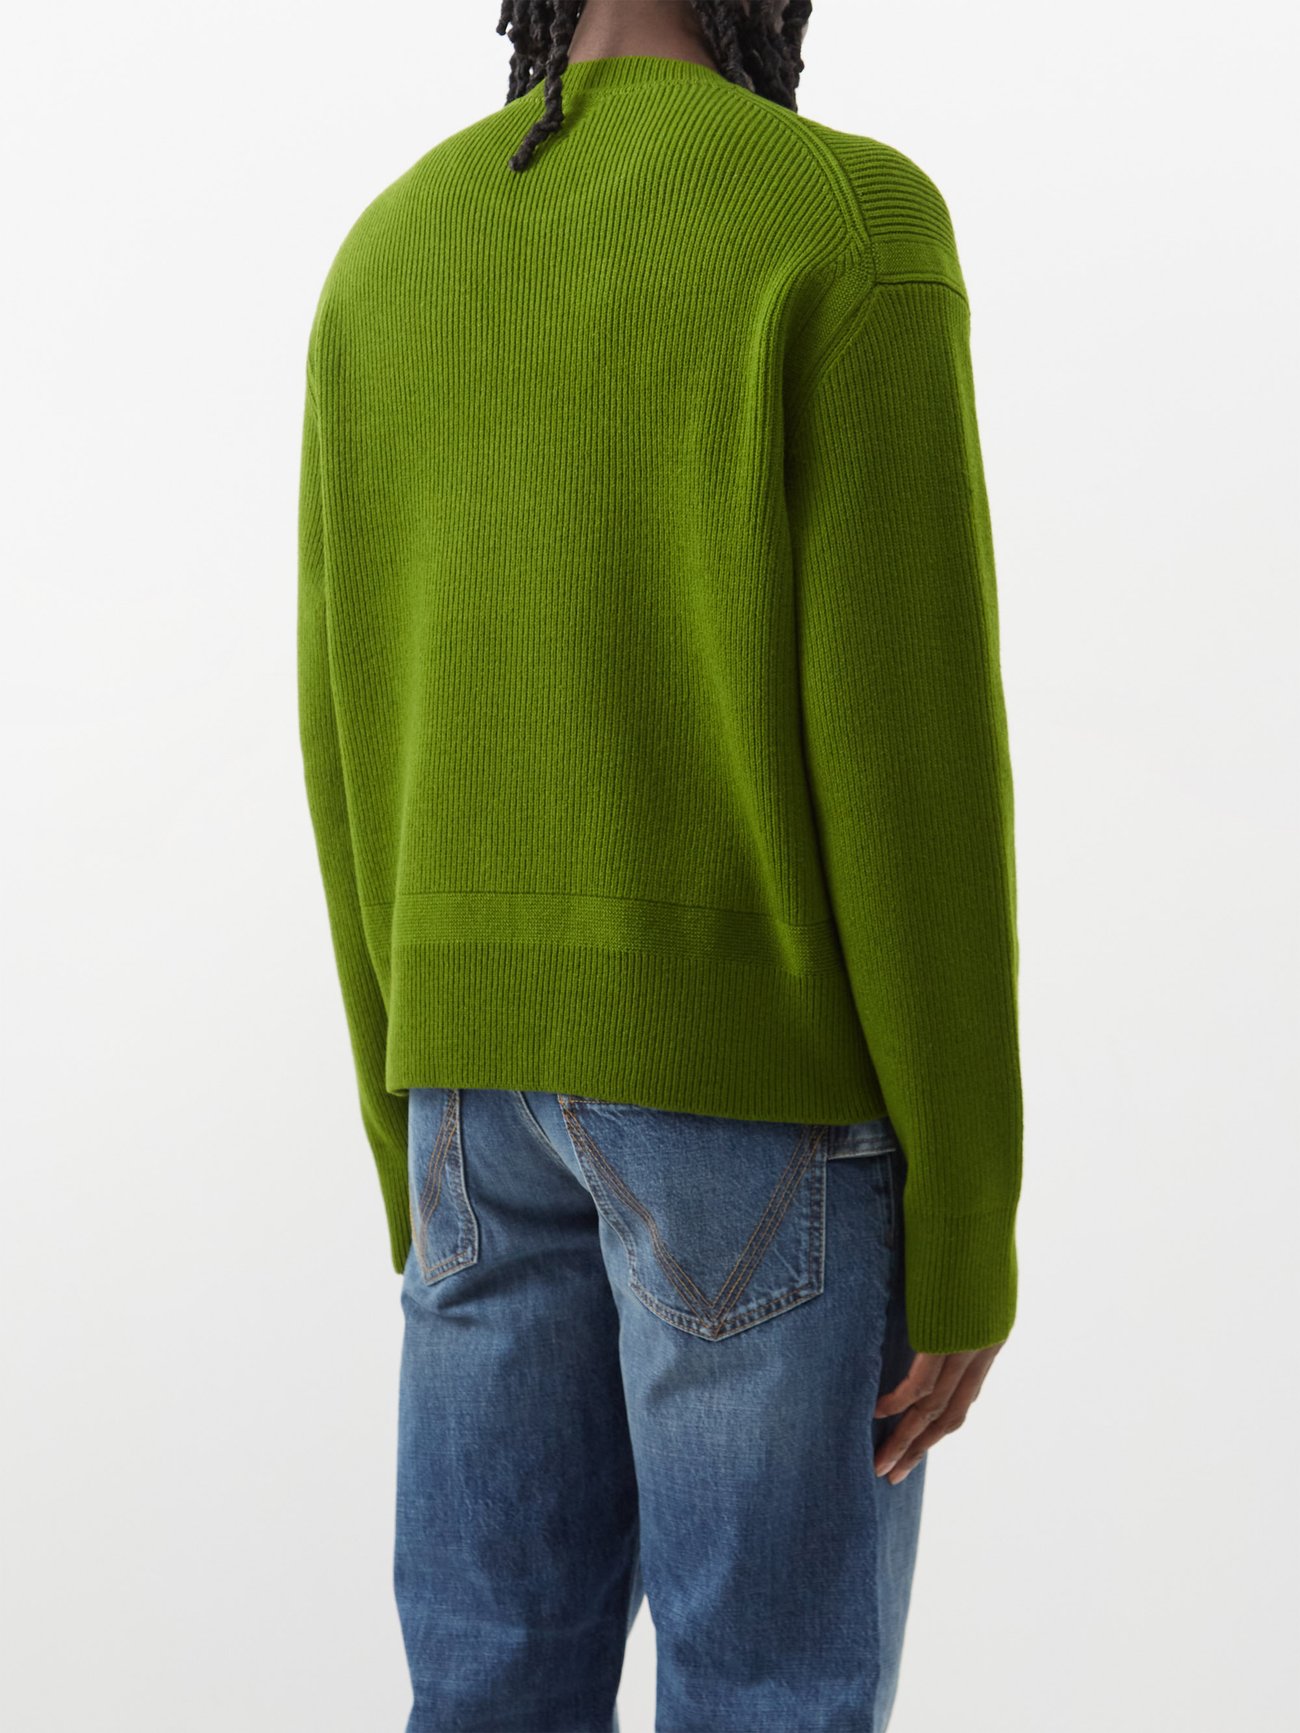 English-rib cashmere-blend sweater